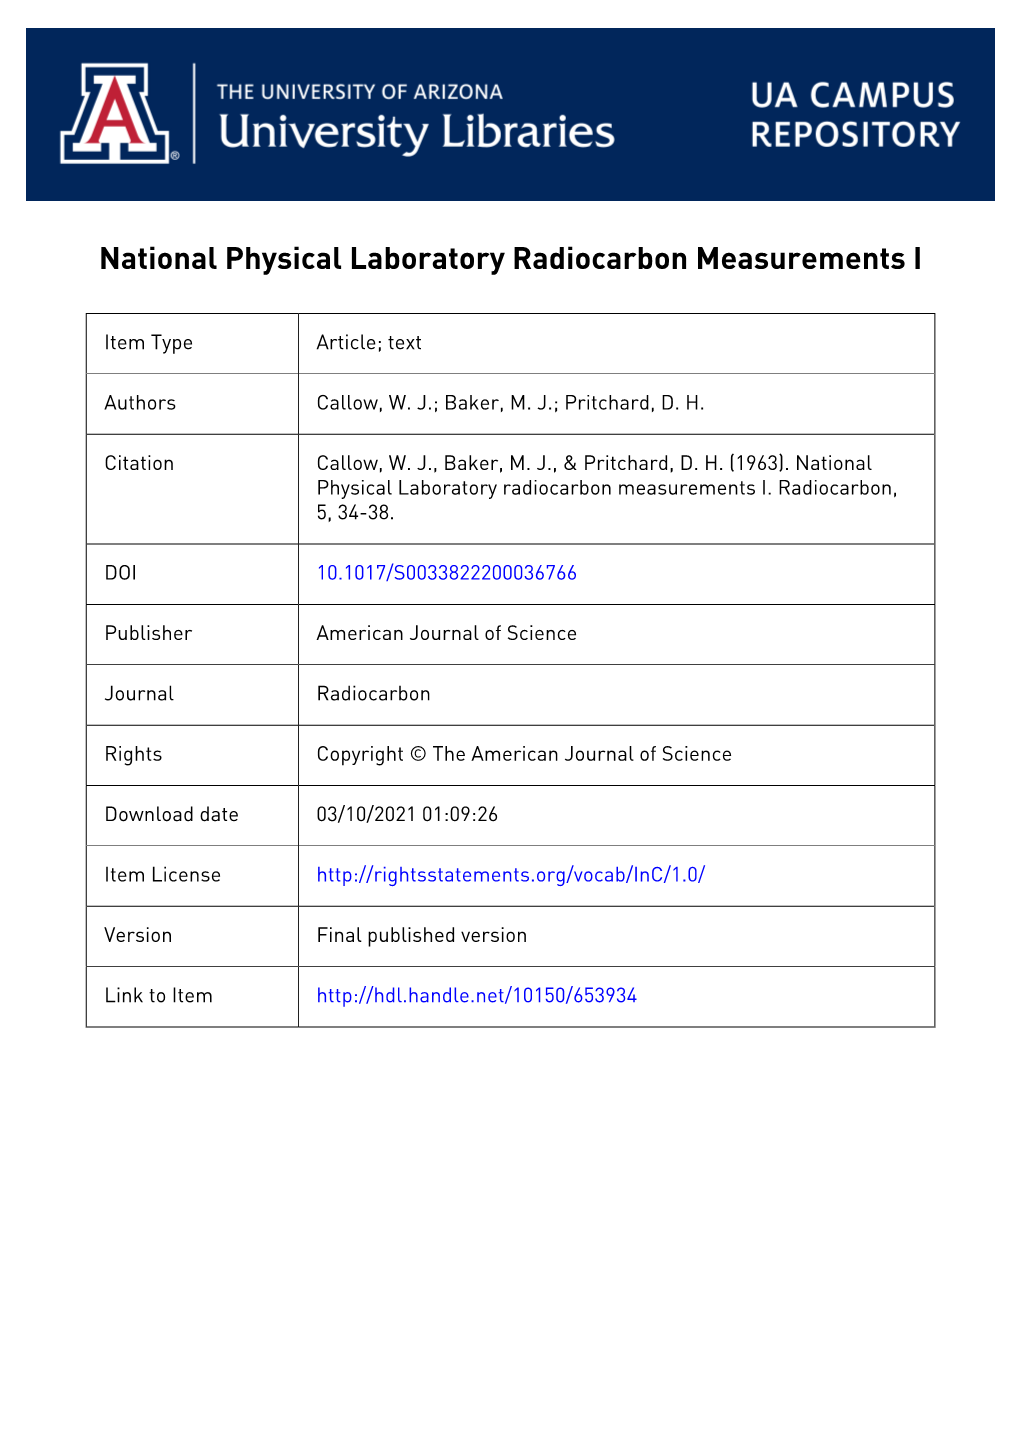 National Physical Laboratory Radiocarbon Measurements I